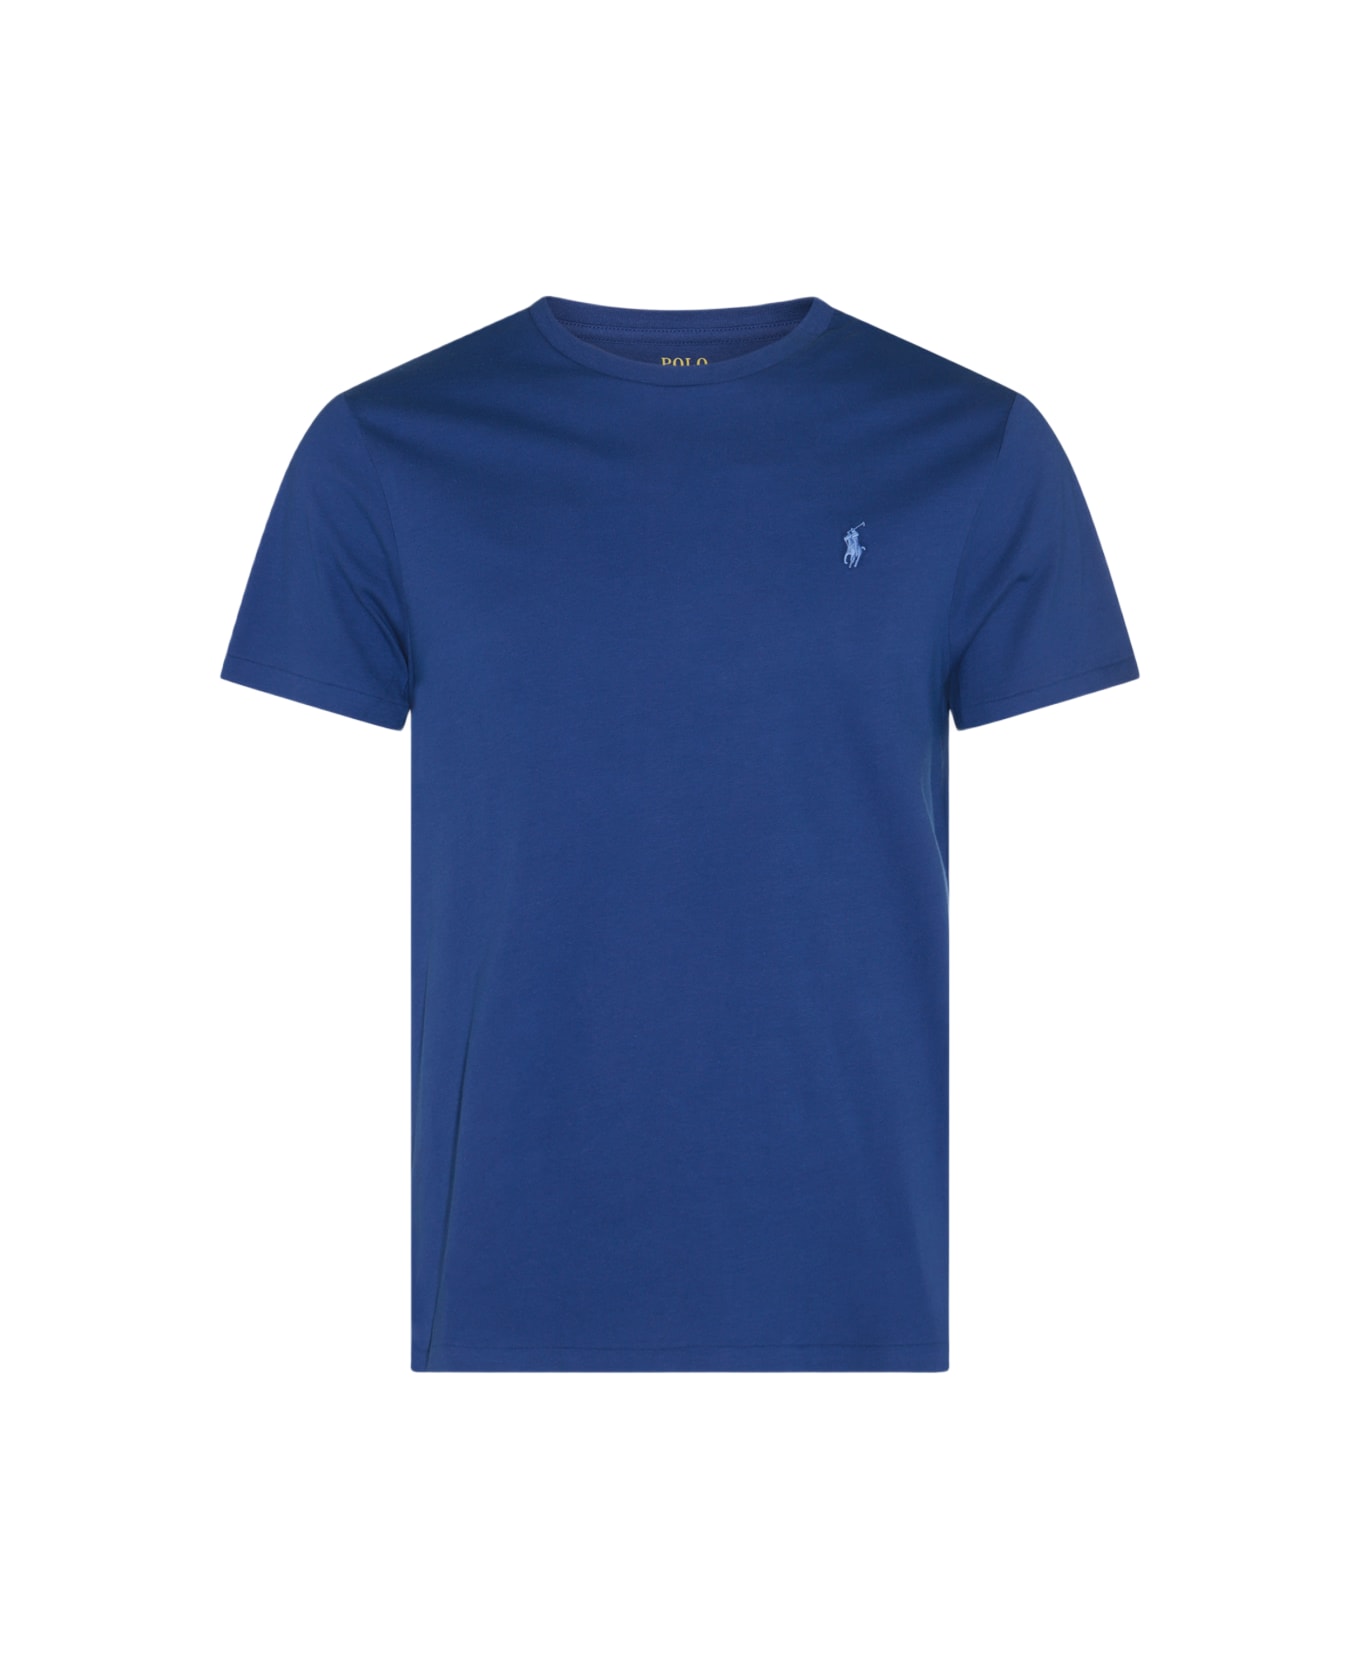 Polo Ralph Lauren Blue Cotton T-shirt - BEACH ROYAL